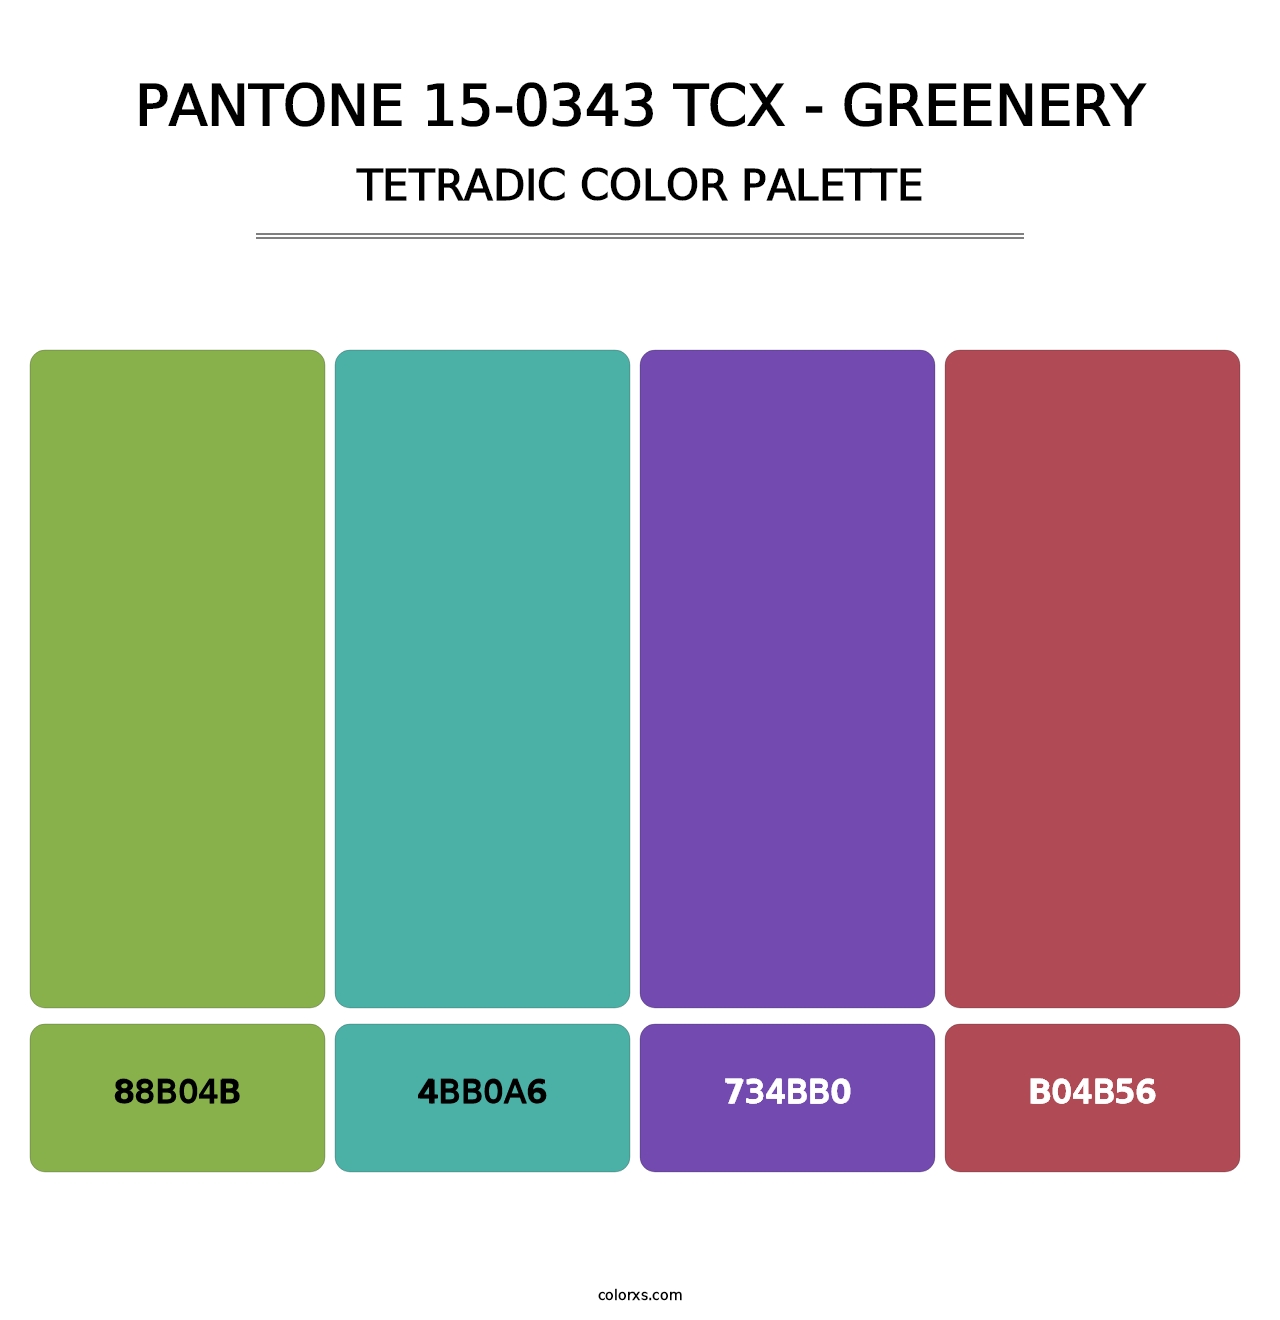 PANTONE 15-0343 TCX - Greenery - Tetradic Color Palette